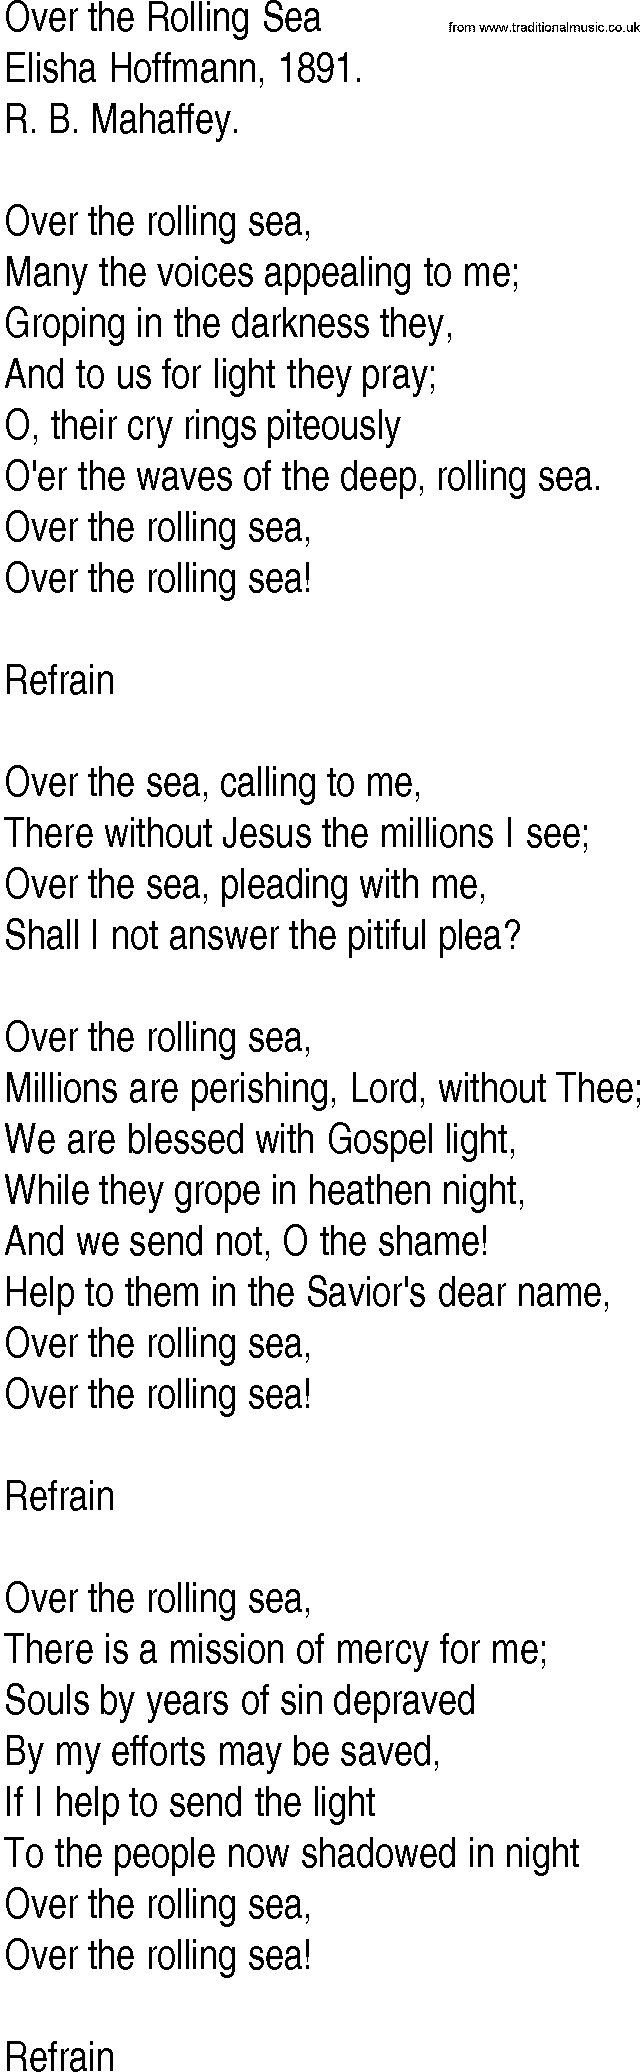 Hymn and Gospel Song: Over the Rolling Sea by Elisha Hoffmann lyrics